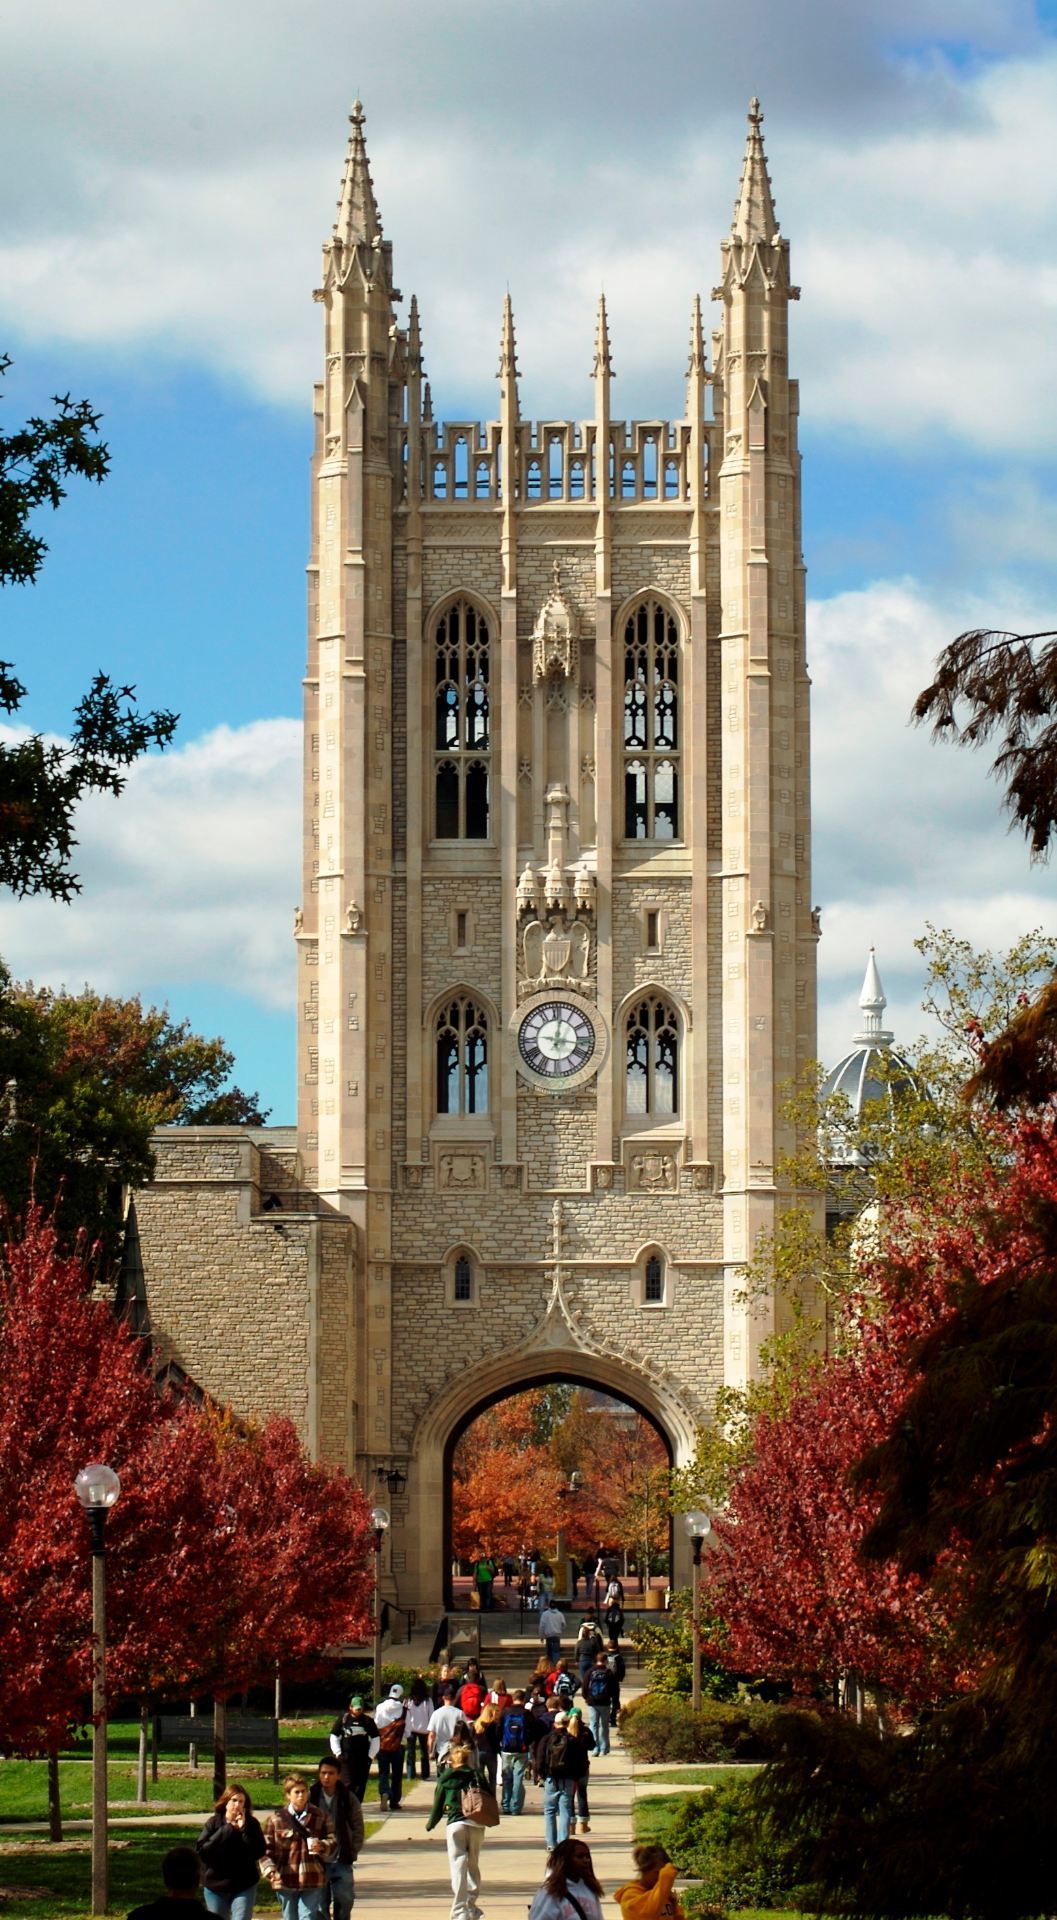  Free Image. University of Missouri-Columbia Memorial Union. WebSource: Wikimedia Commons through Google Advanced Image Search.